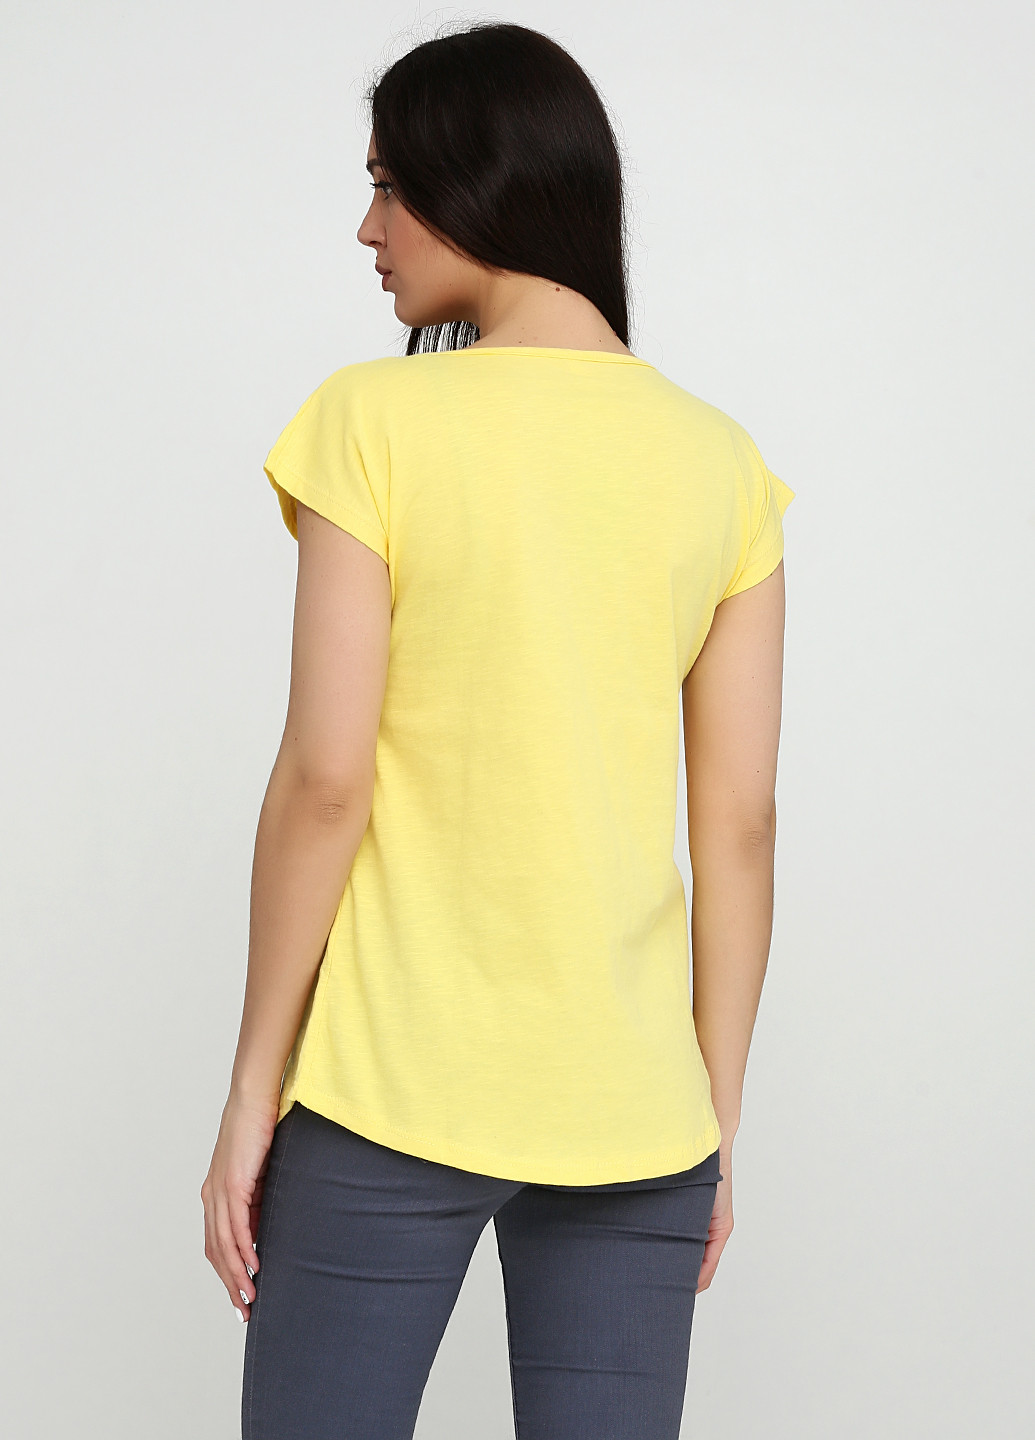 Желтая летняя футболка KSV